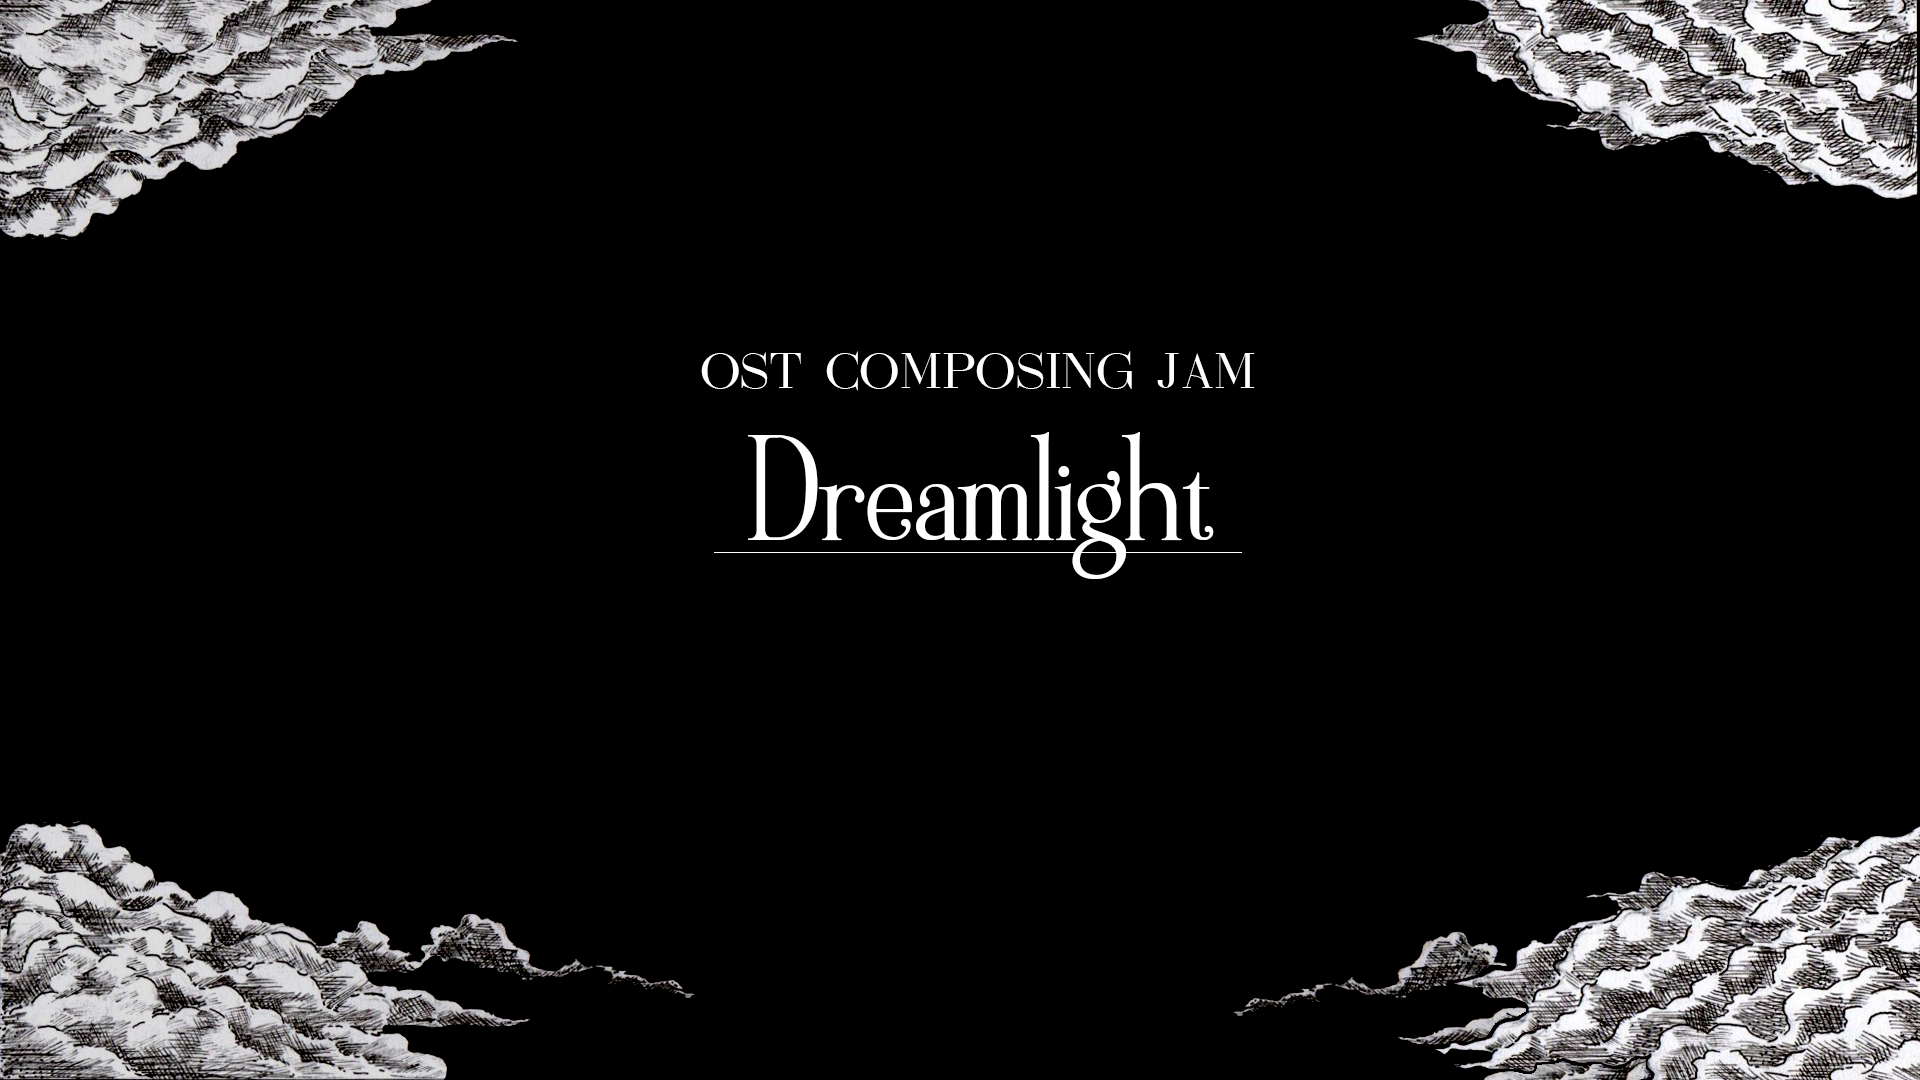 Dreamlight Album